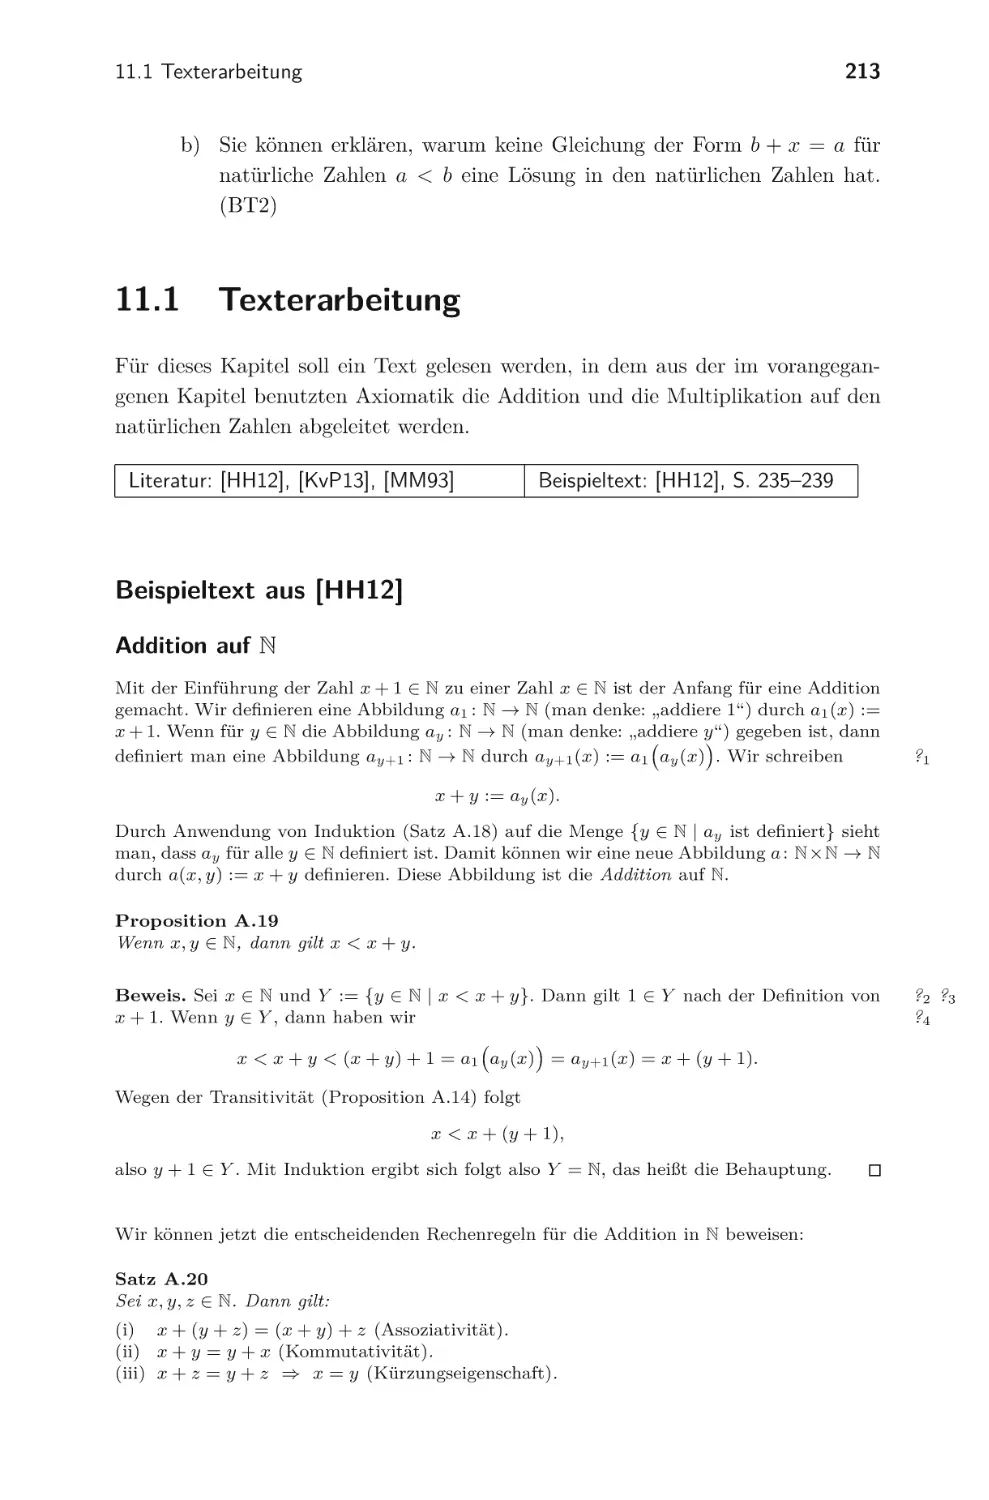 11.1 Texterarbeitung
Beispieltext aus [HH12]